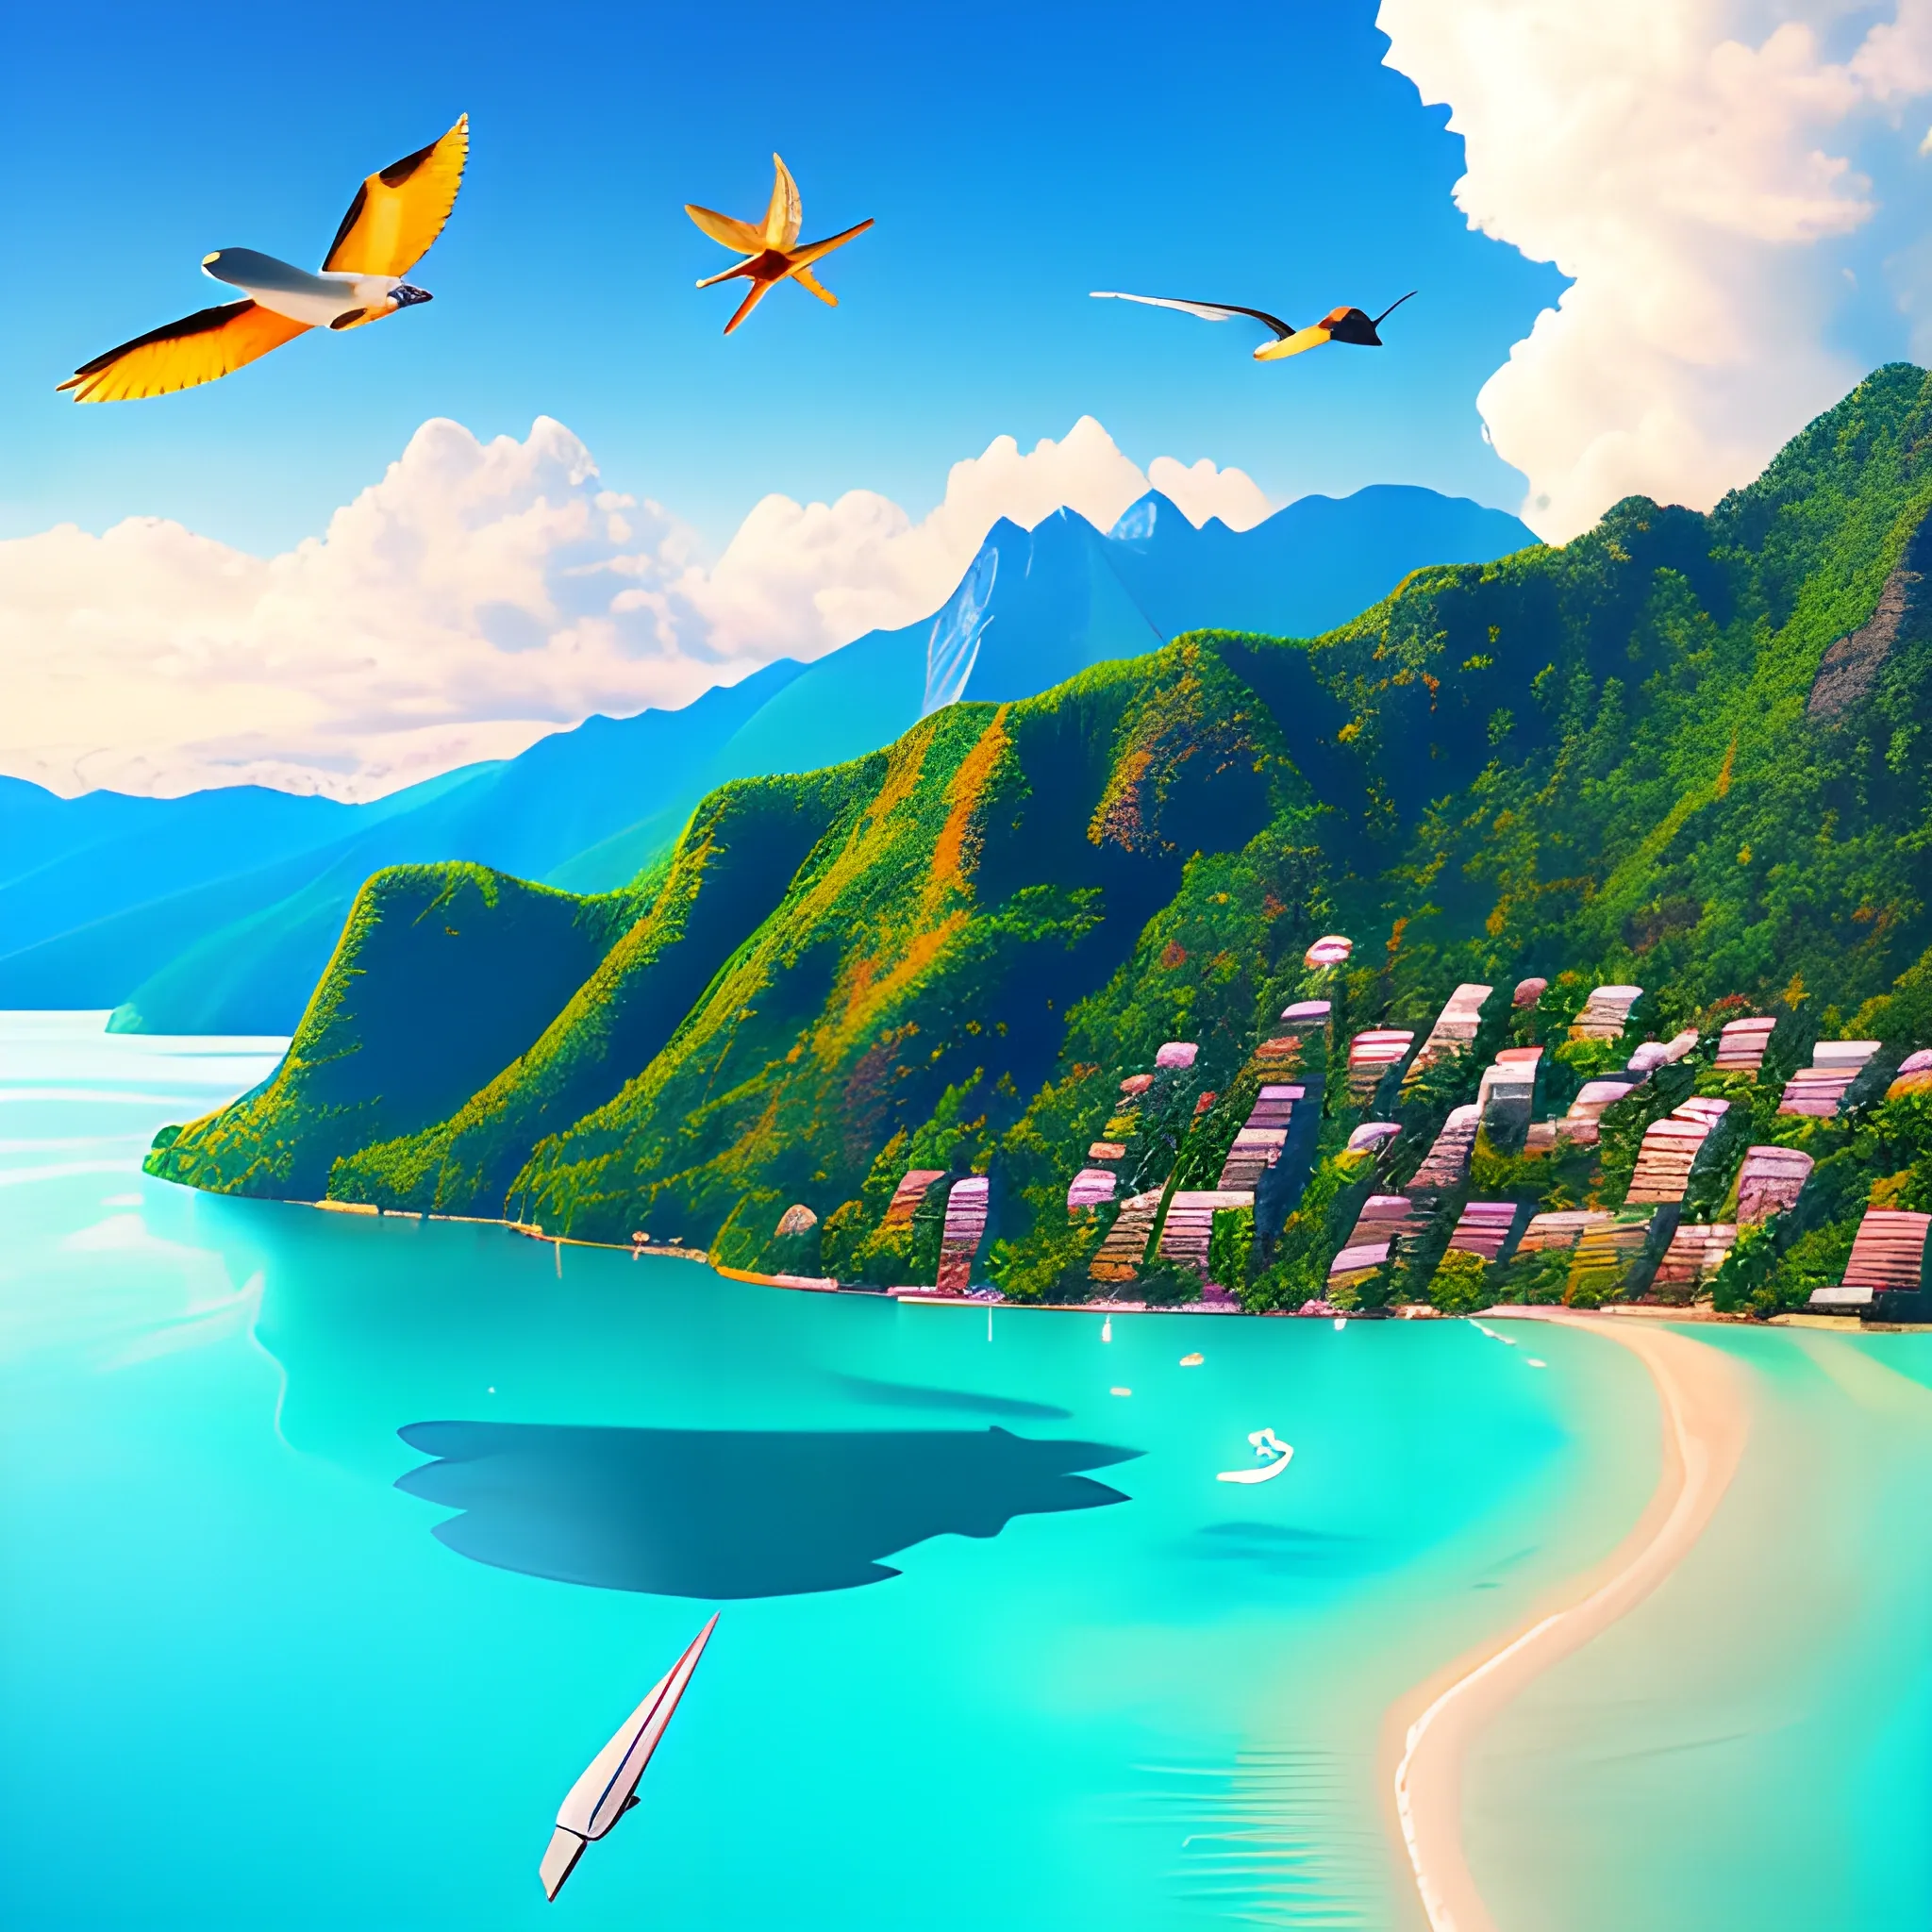 mountains, tourists, lake, beach, vacation, coconuts, plane, birds, tropics, burning yachts, 8k